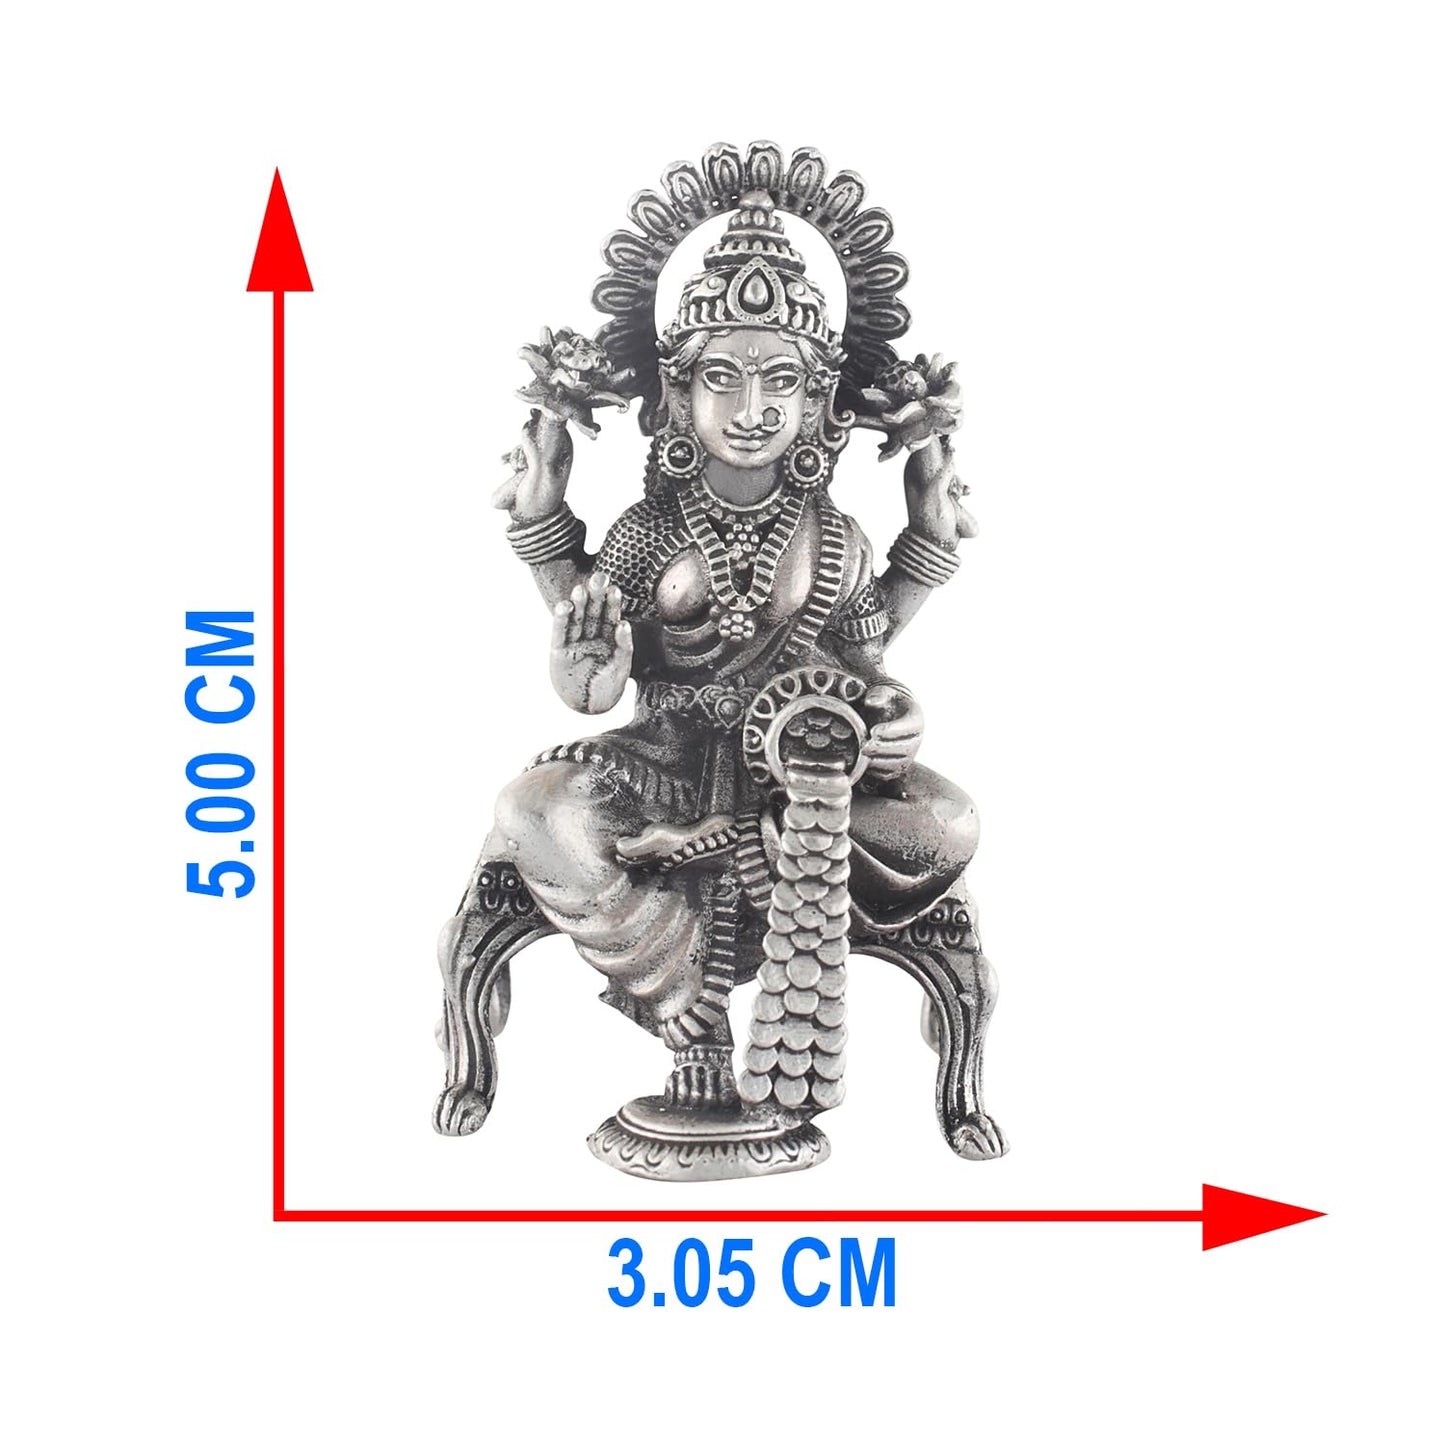 size of laxmi idol